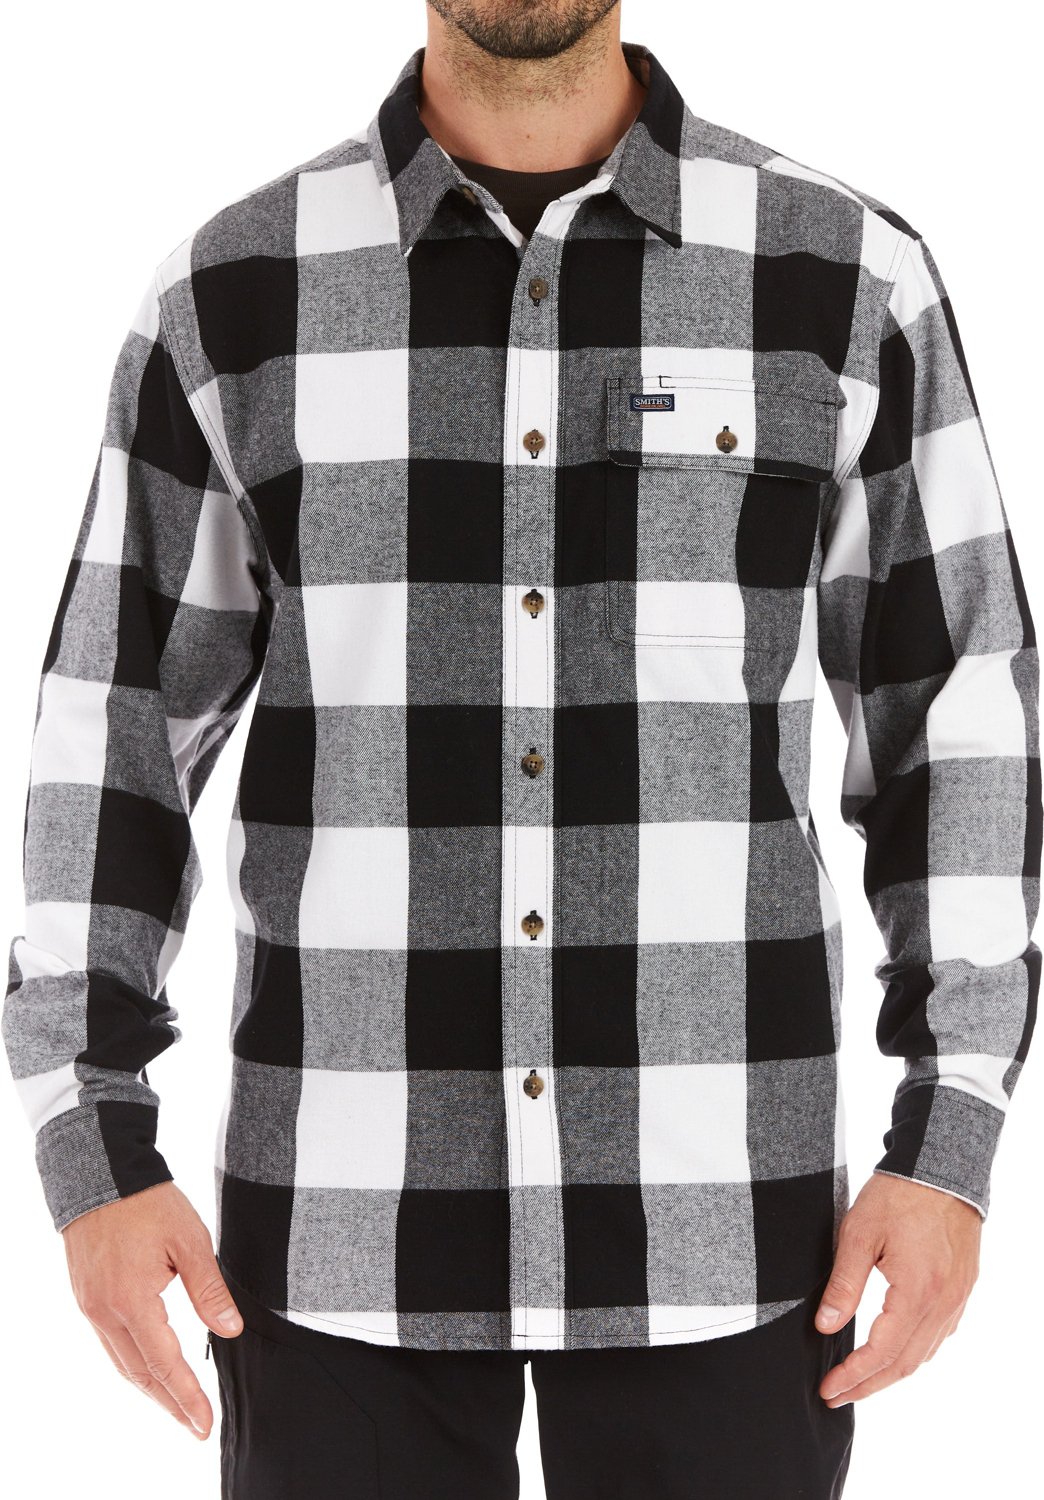 Smiths Workwear Mens Buffalo Flannel Button Down Shirt